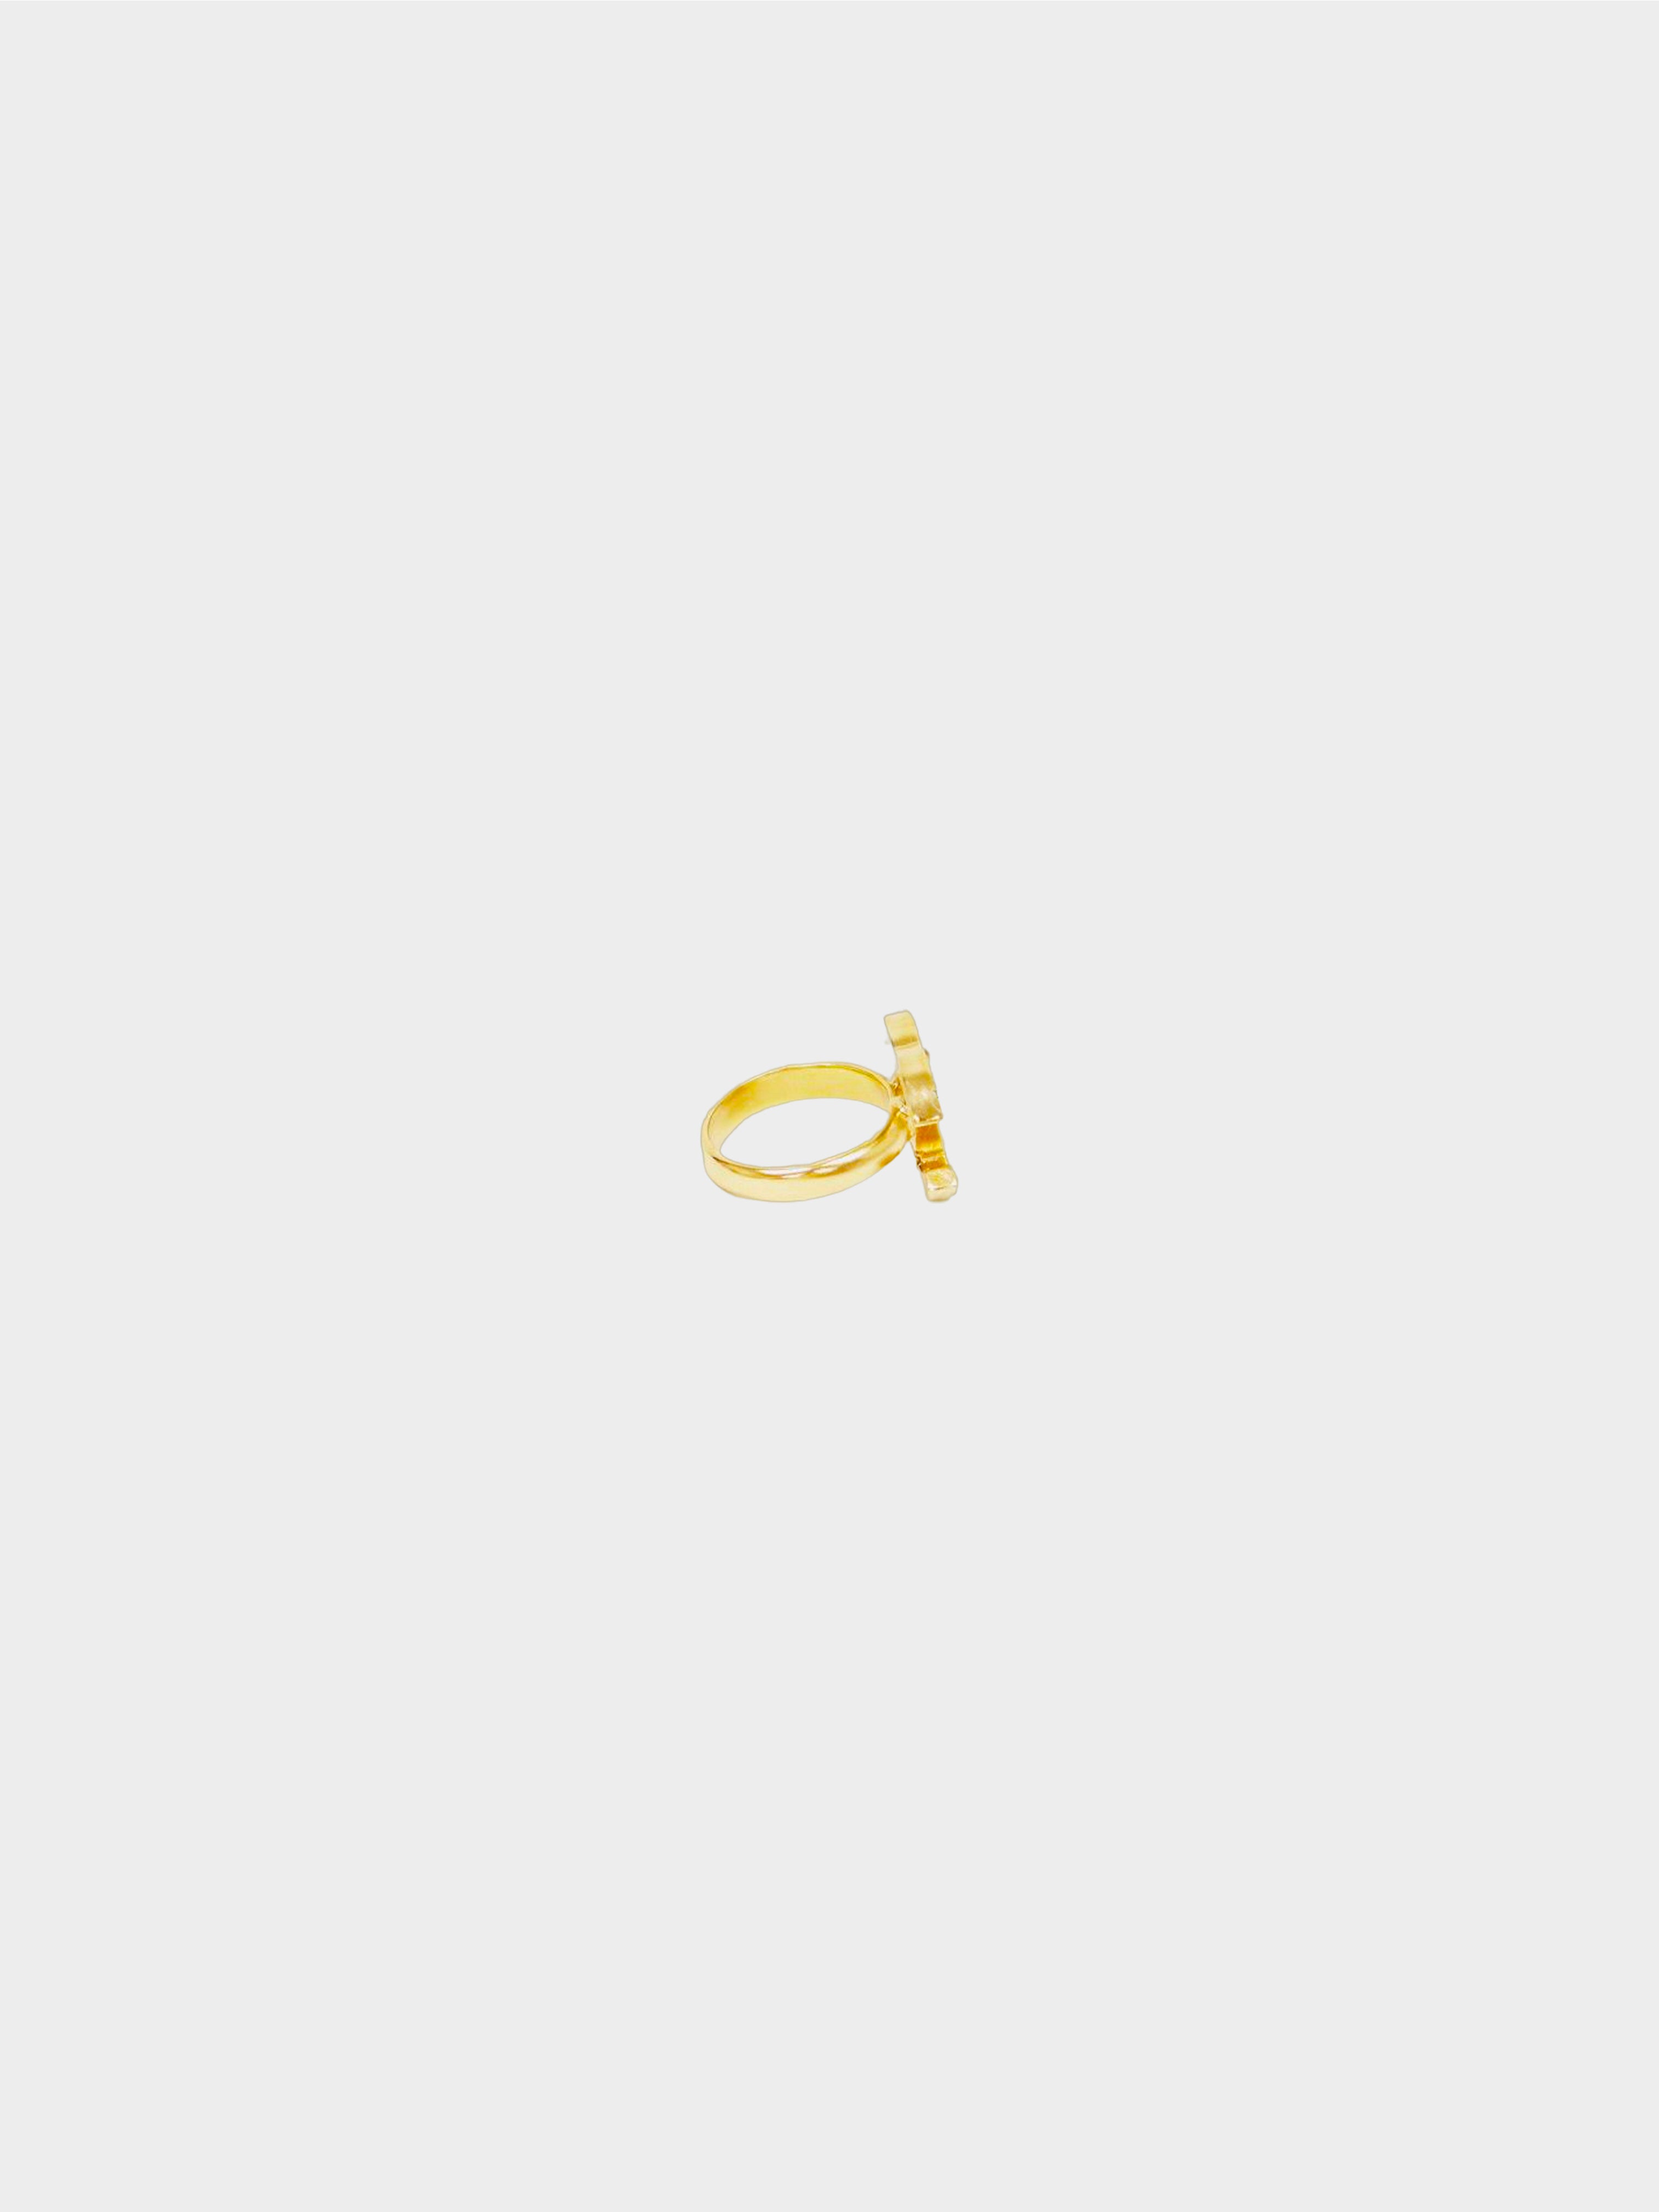 Chanel 2010s Gold CC Logo Ring